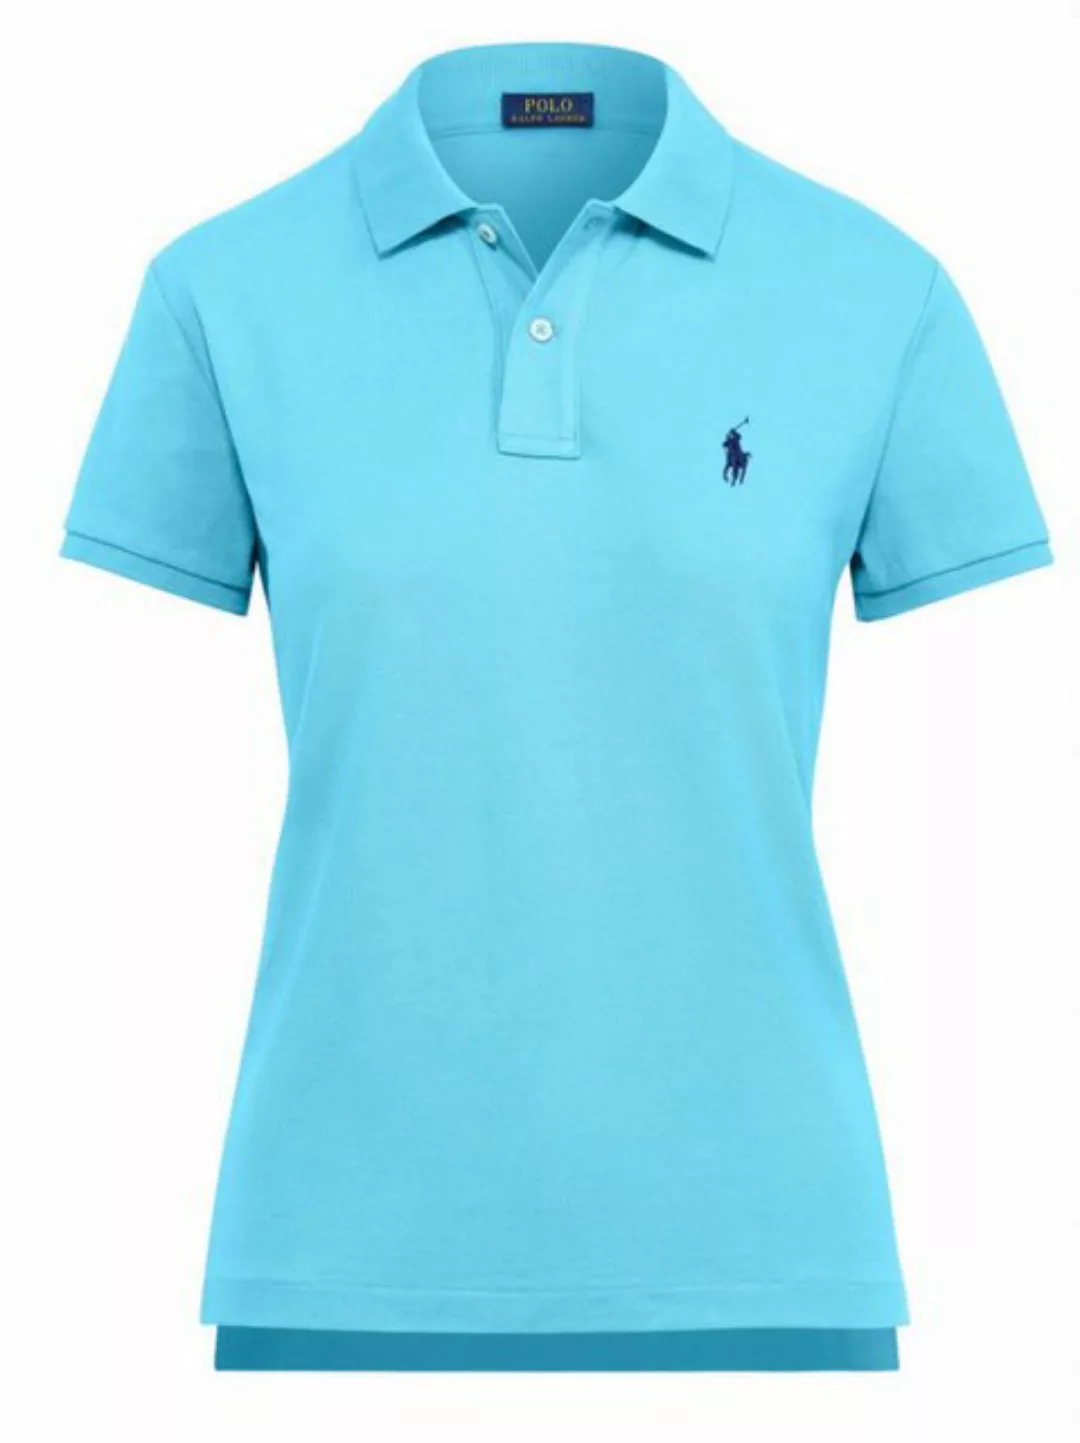 Polo Ralph Lauren Poloshirt Poloshirt Polohemd Shirt Bluse Hemd Pony Top Te günstig online kaufen